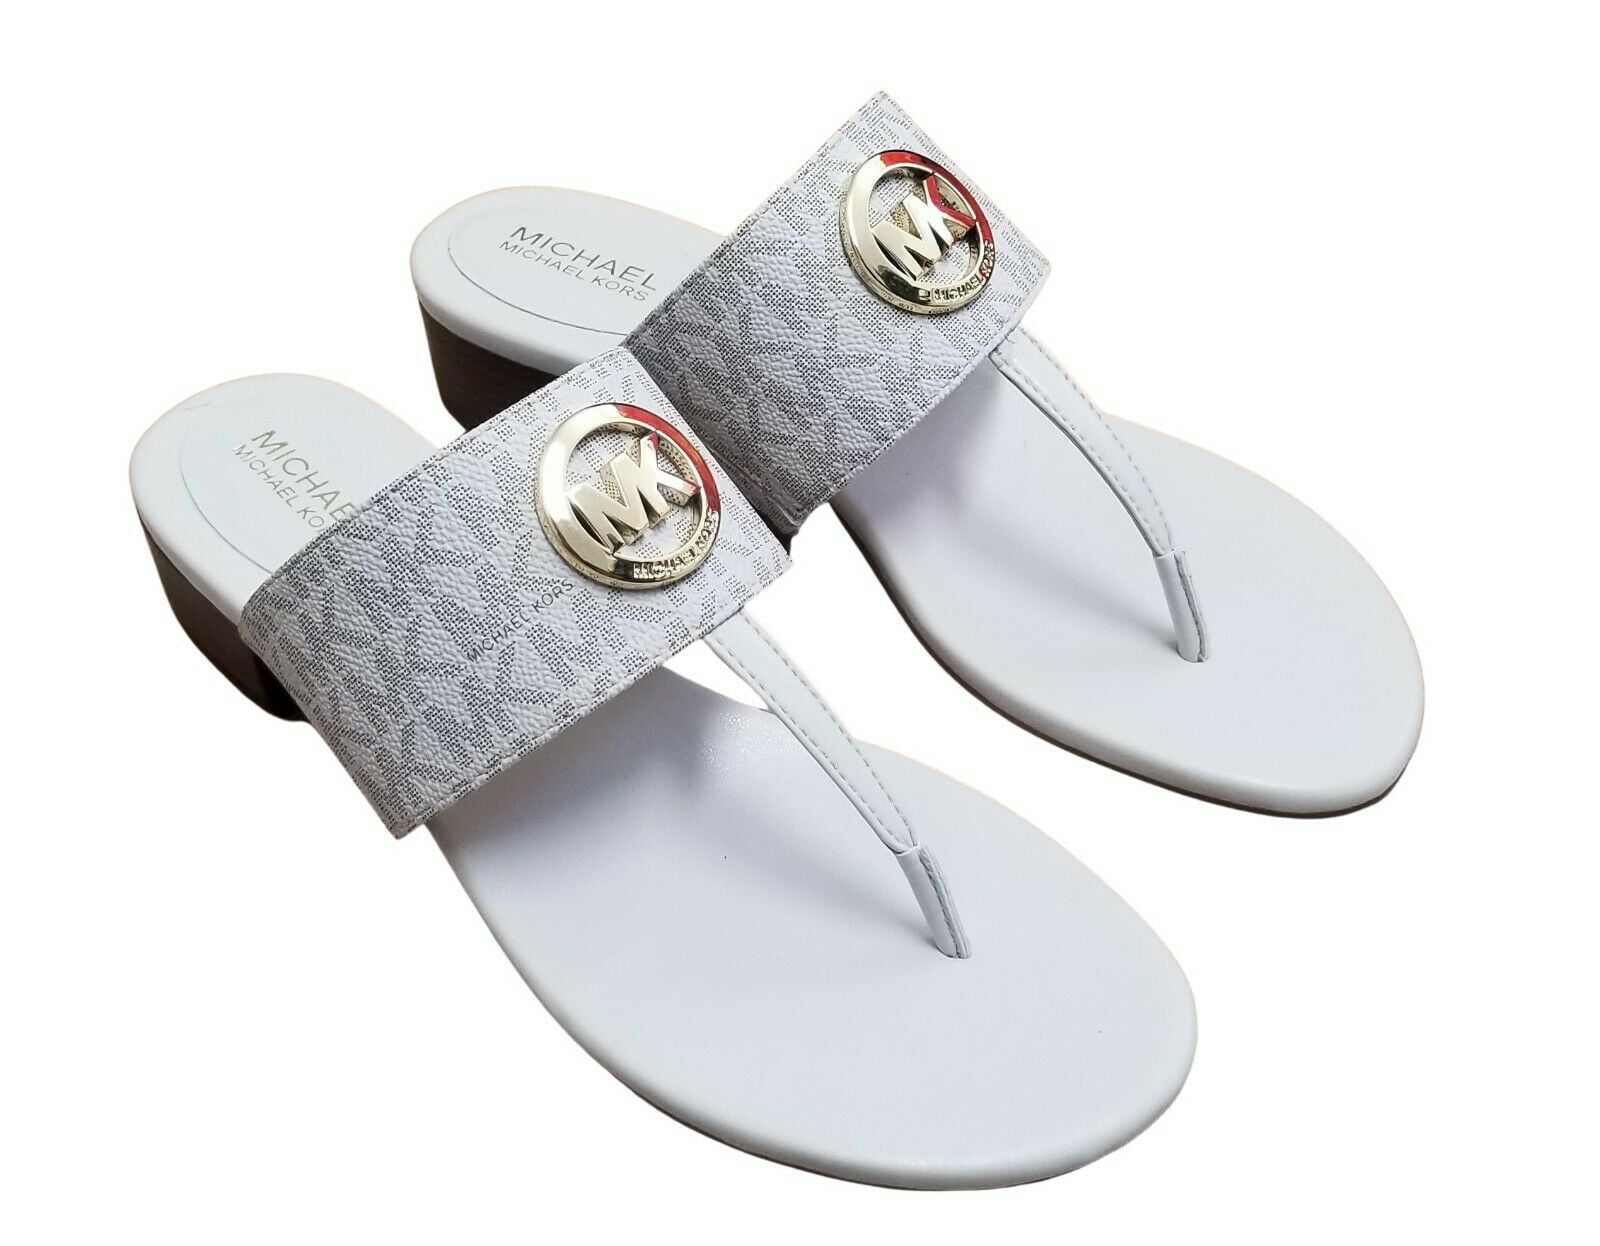 Michael Kors Ireland Thong Vanilla Women's Sandals Size 7.5